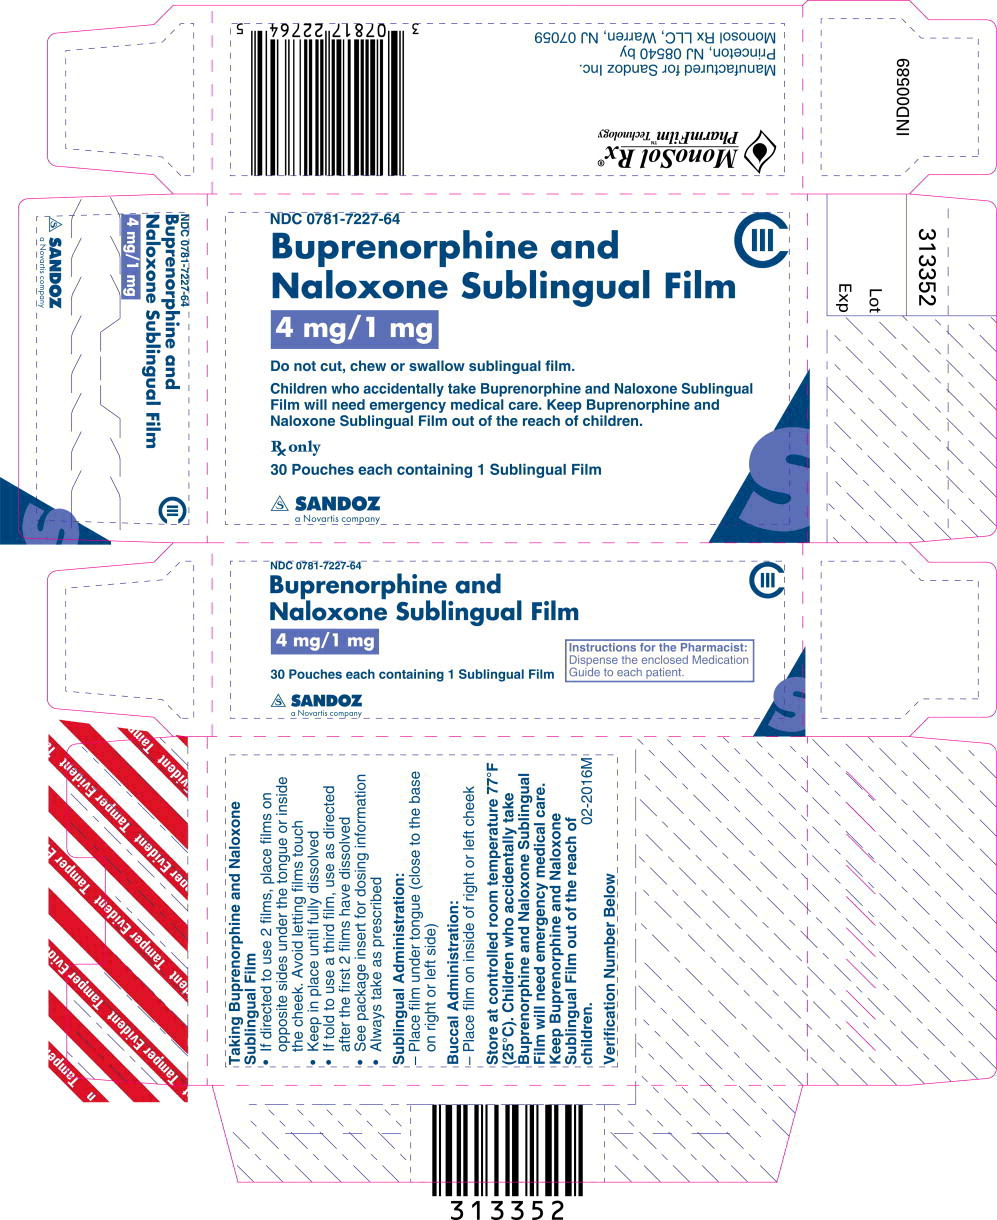 Principal Display Panel - Buprenorphine and Naloxone Sublingual Film 4 mg/1 mg Carton Label
